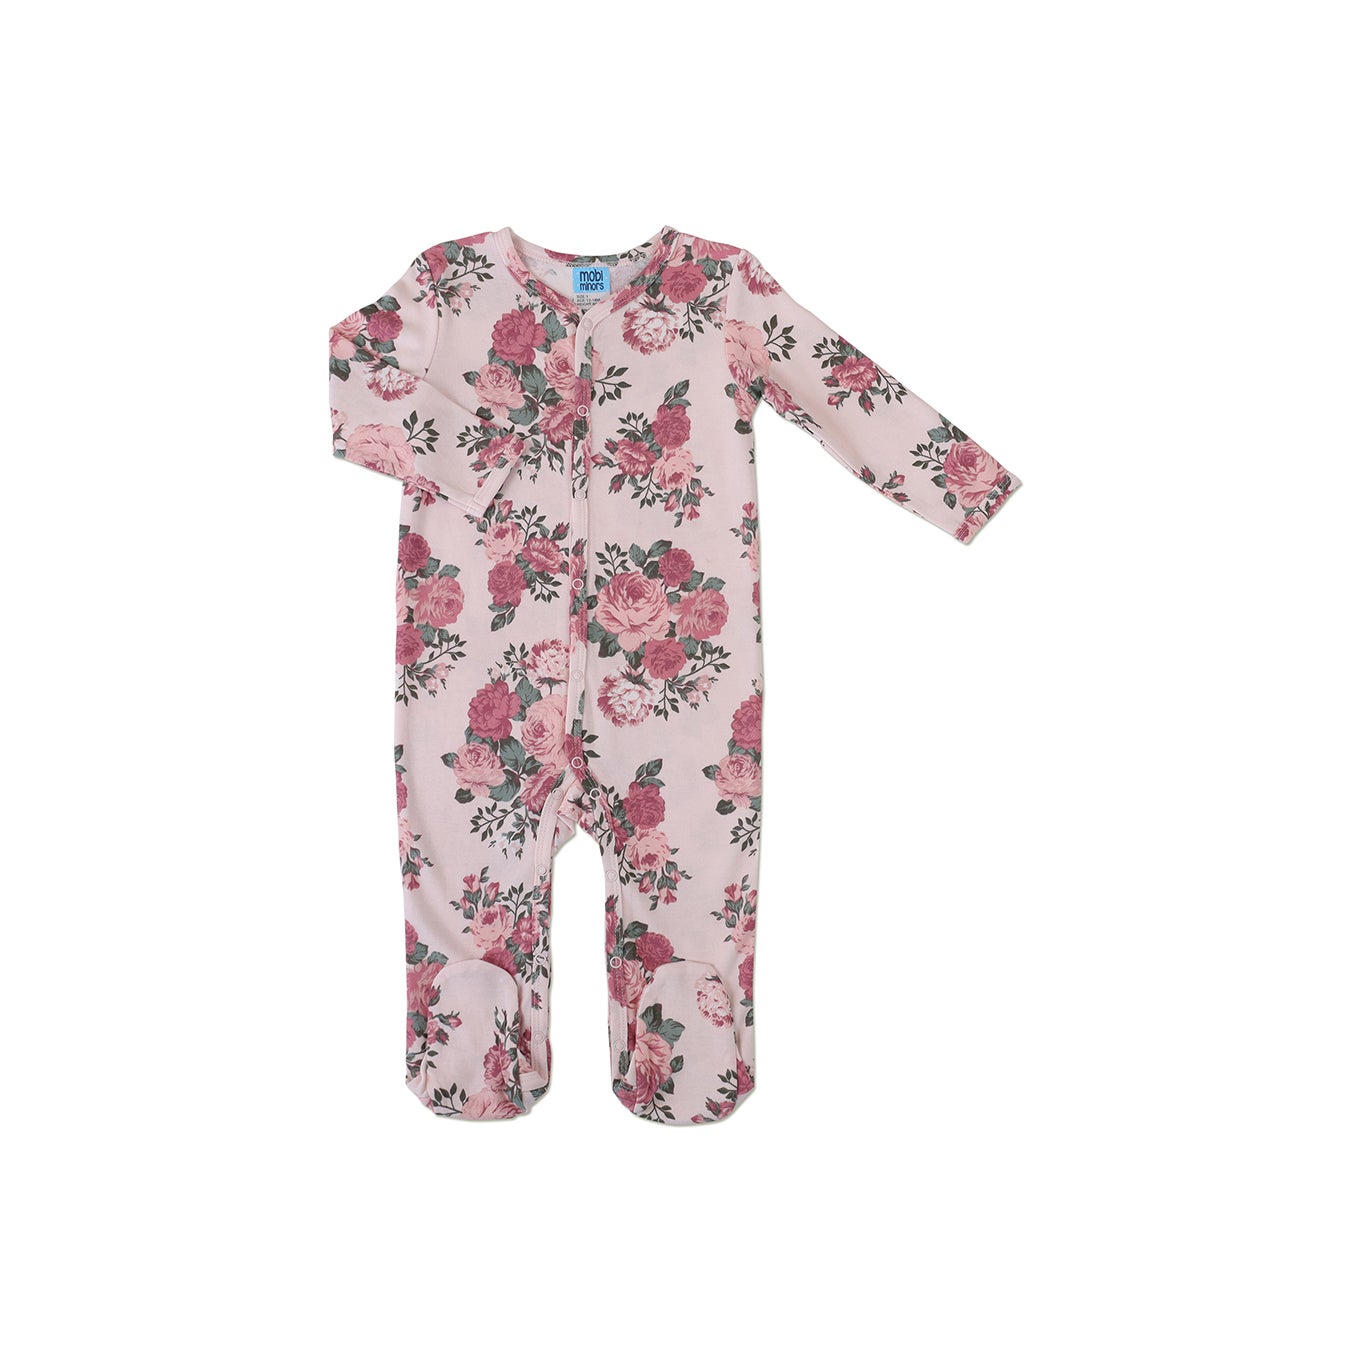 Mobi Minors EDLP Button Growsuit | Growsuits | Baby Factory